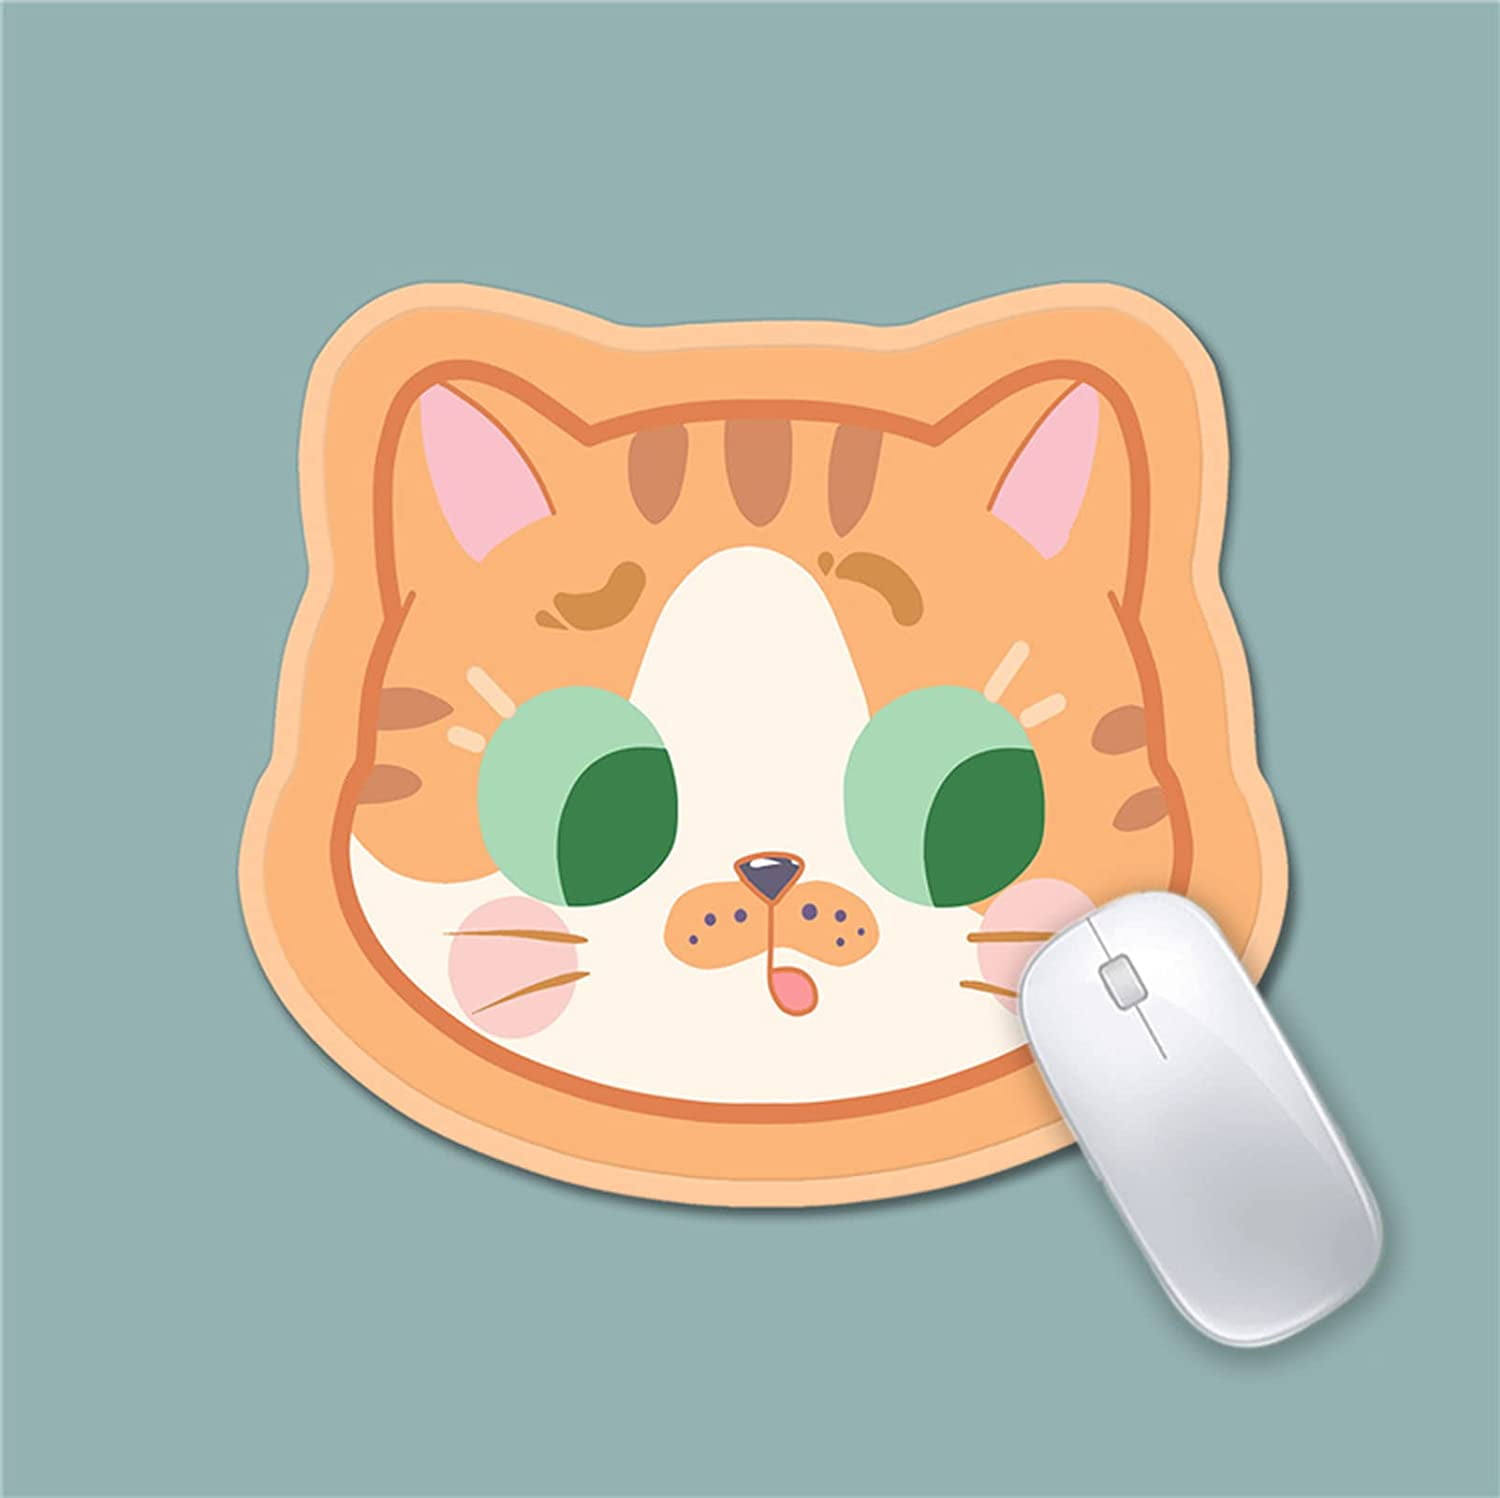 SIDONKU Gray Angry Persian Cat Face Cartoon Domestic Feline Funny Furry  Gloomy Mousepad Mouse Pad Mouse Mat 9x10 inch 